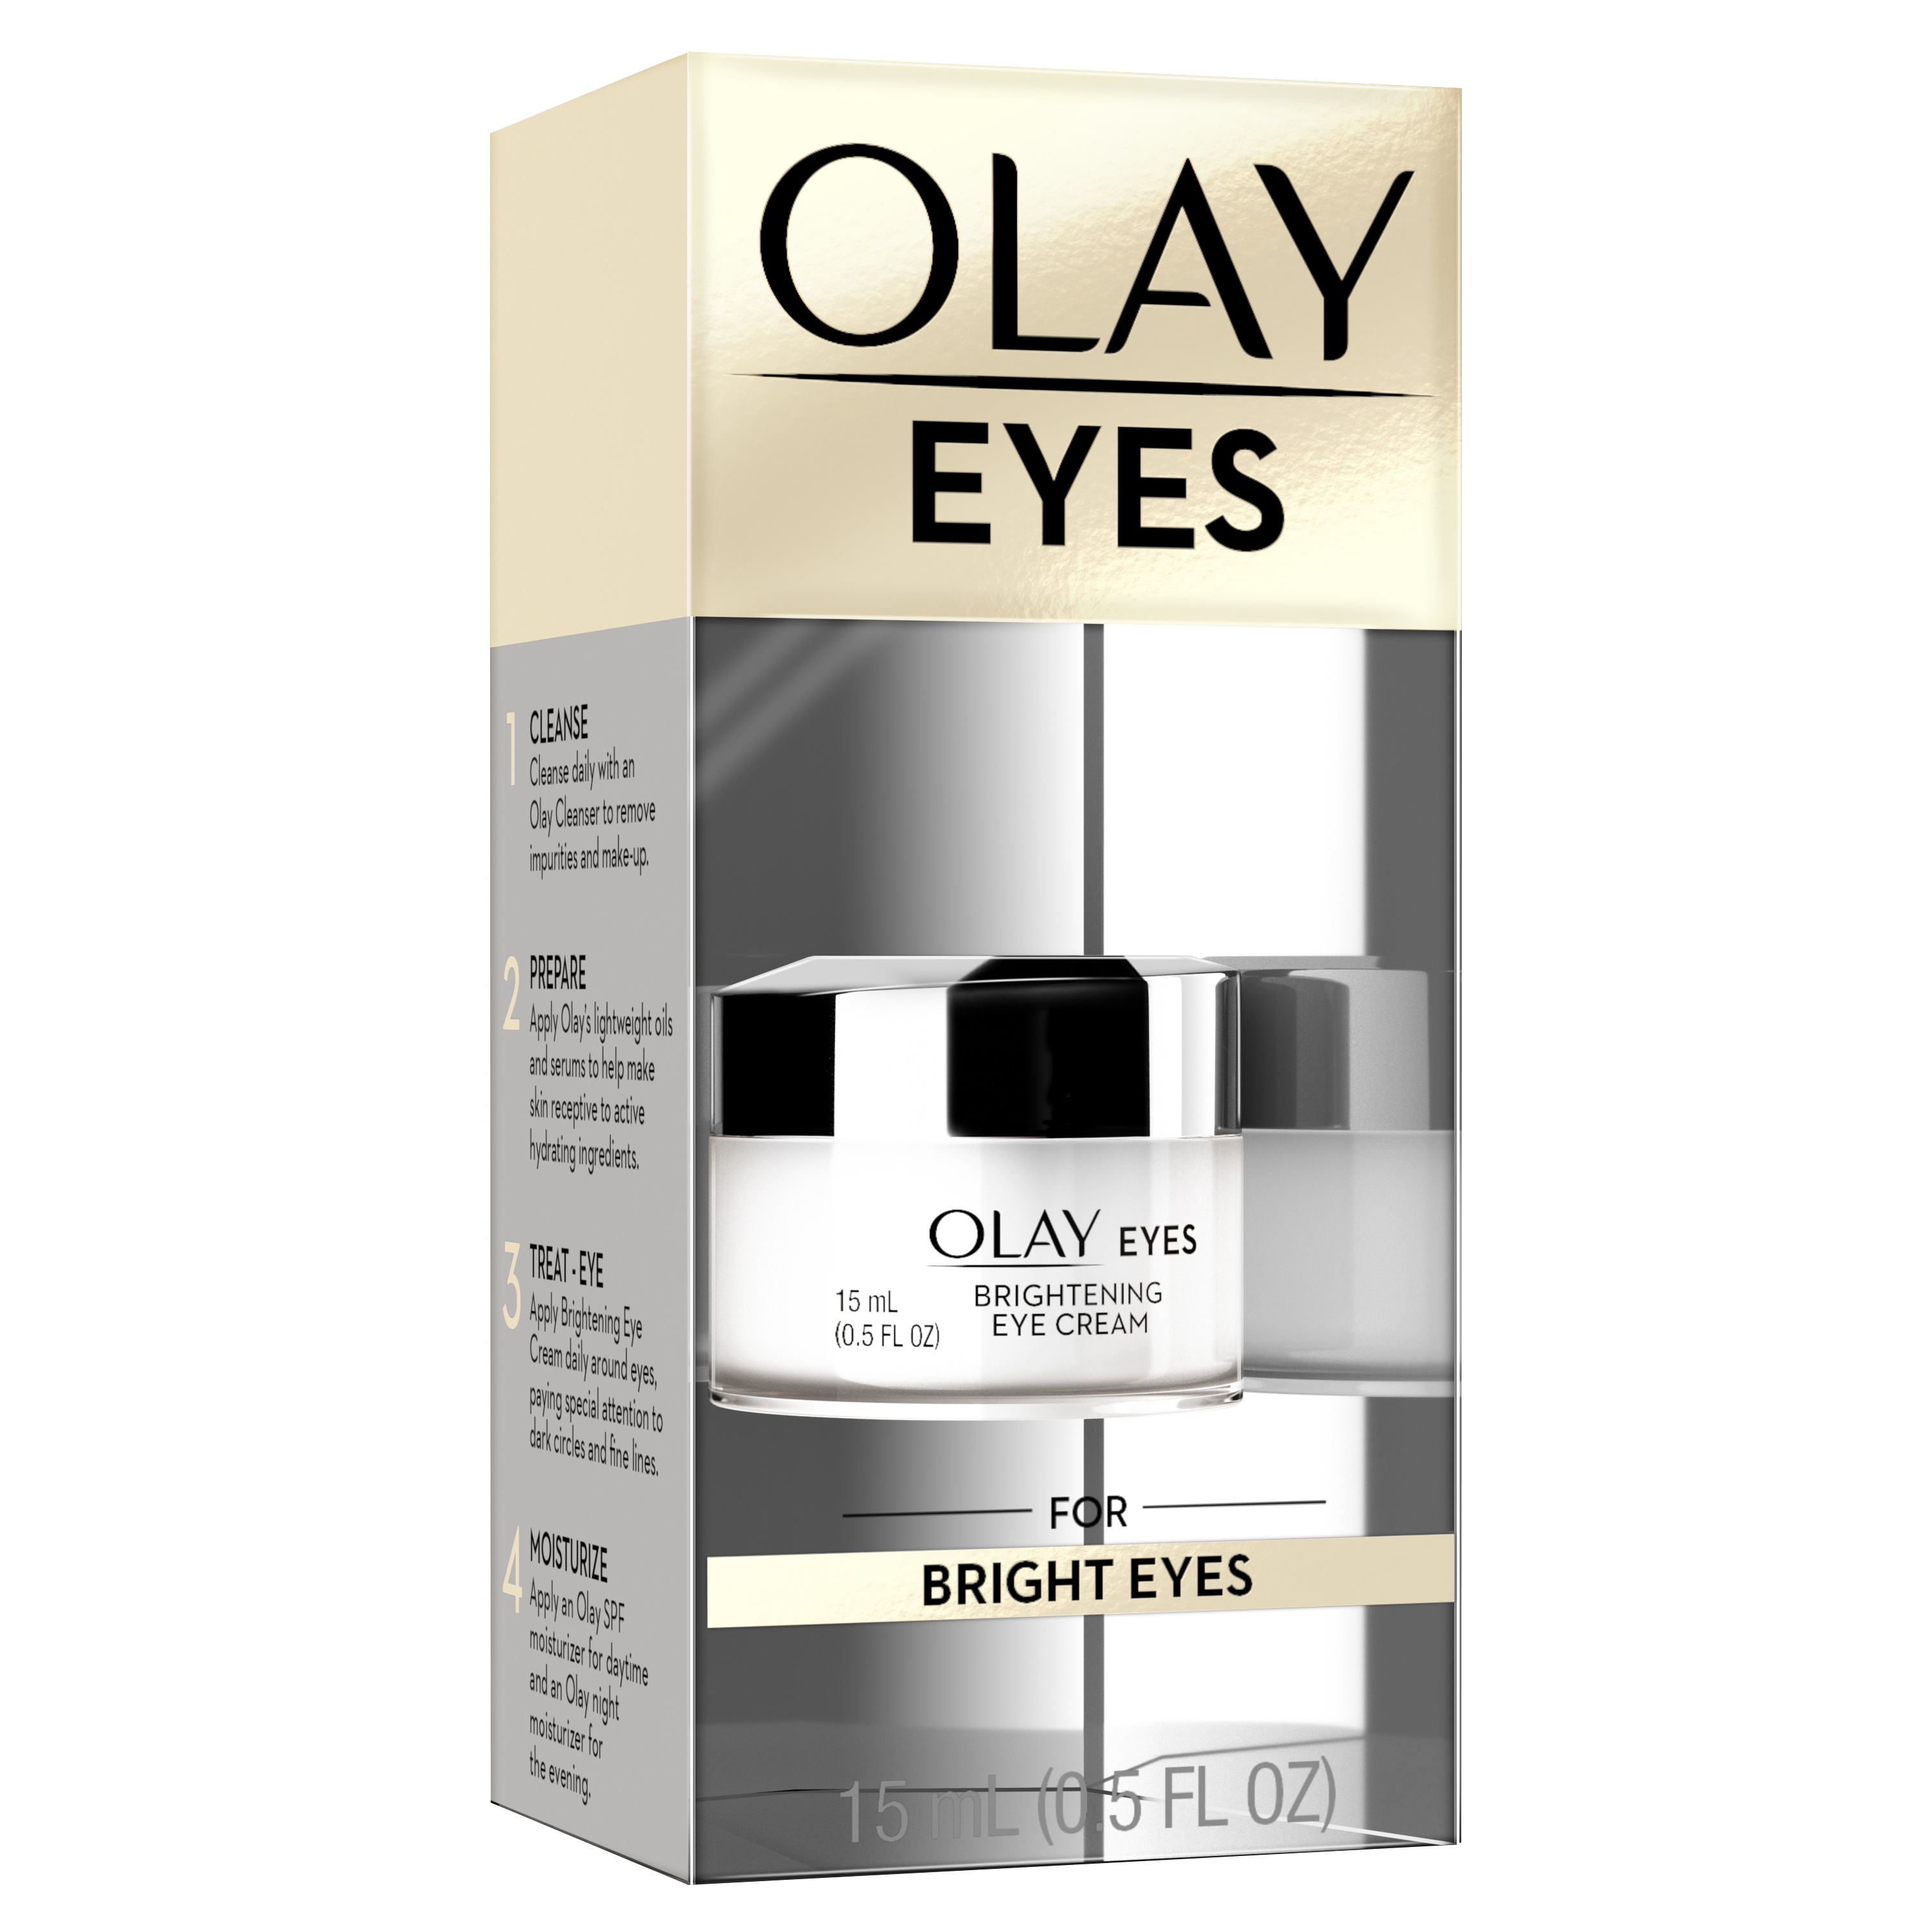 Olay Eyes Brightening Eye Cream for Dark Circles, 0.5 fl oz_1